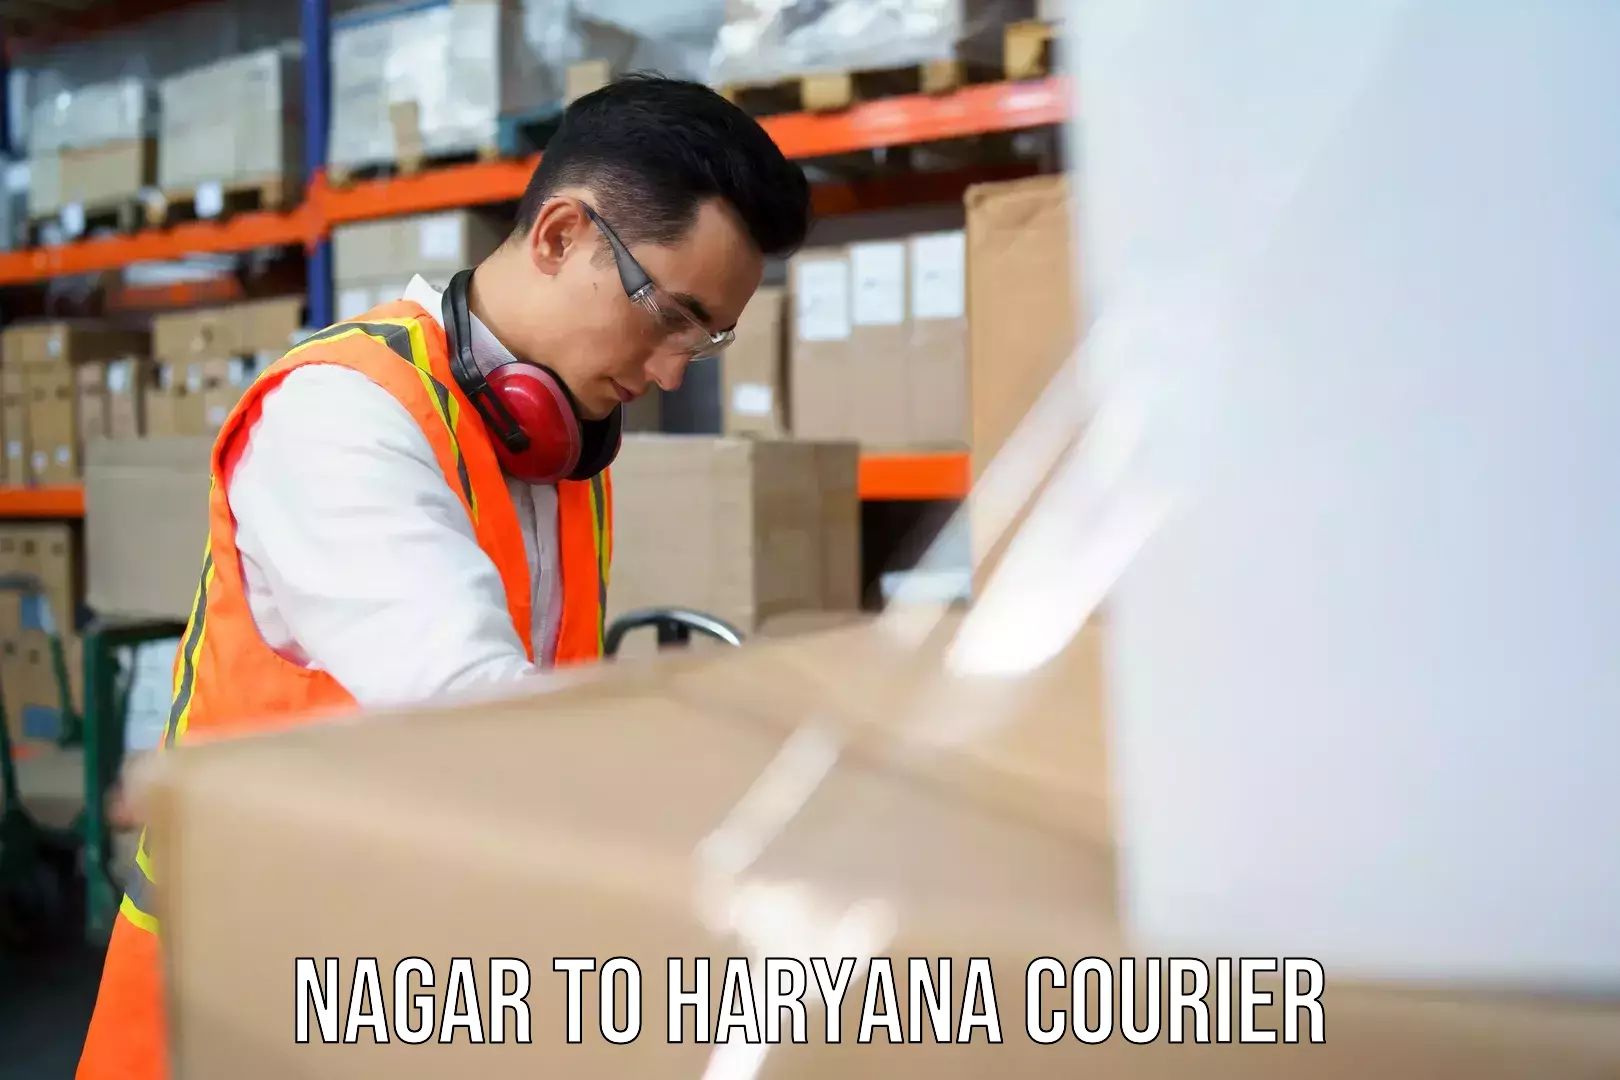 Courier service efficiency Nagar to Ambala